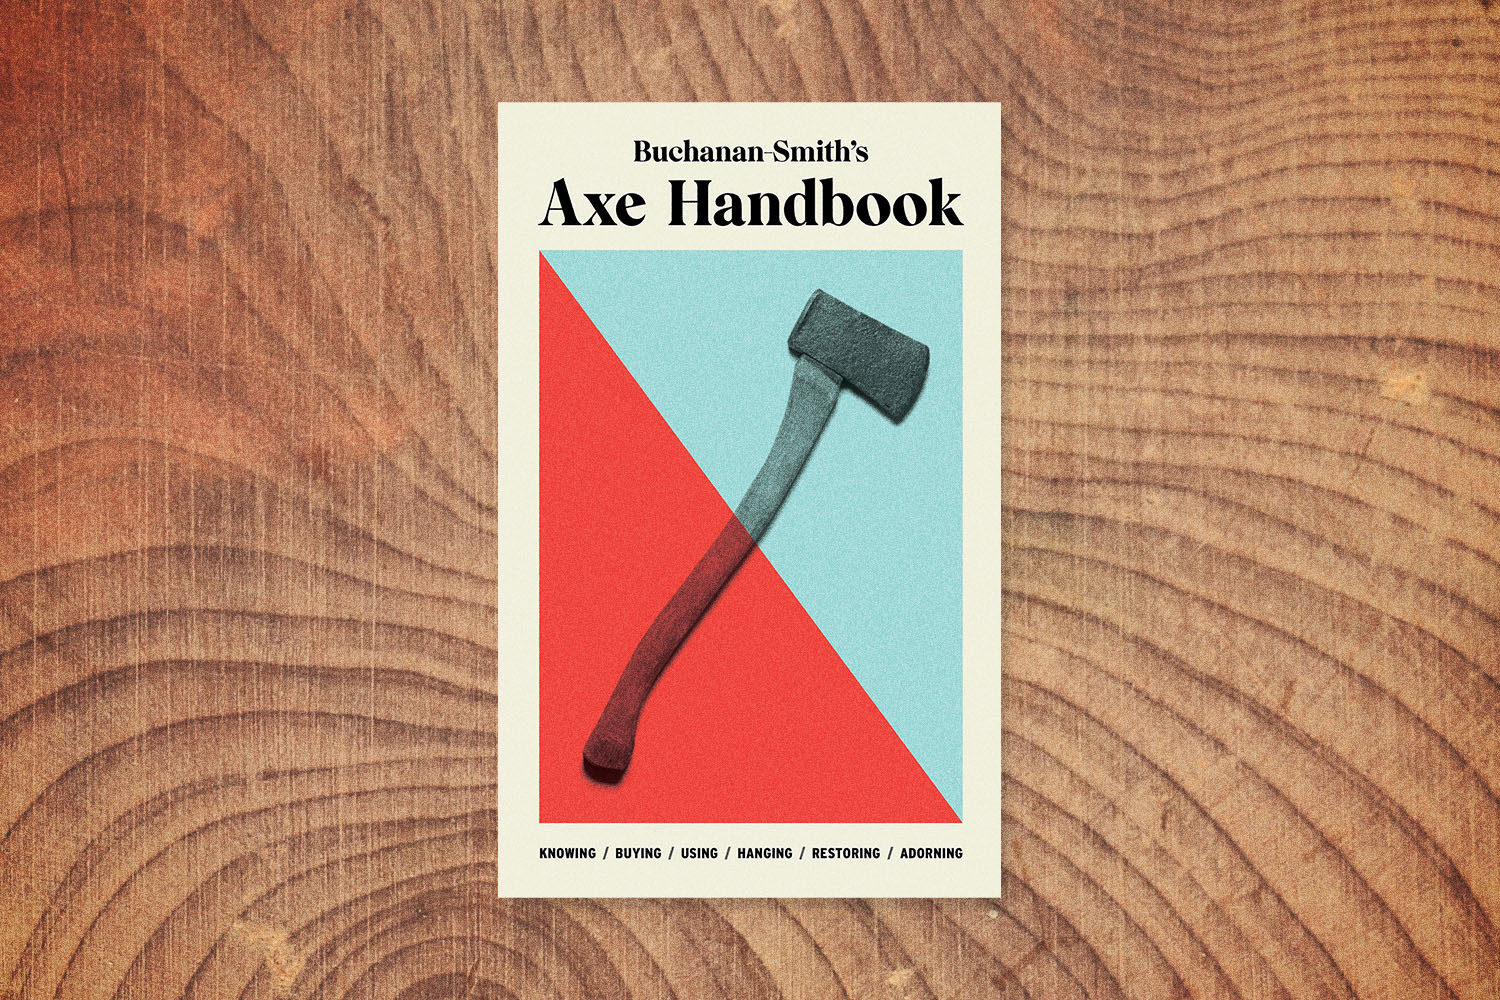 The cover of Peter Buchanan-Smith's book "Axe Handbook" on a wood grain background